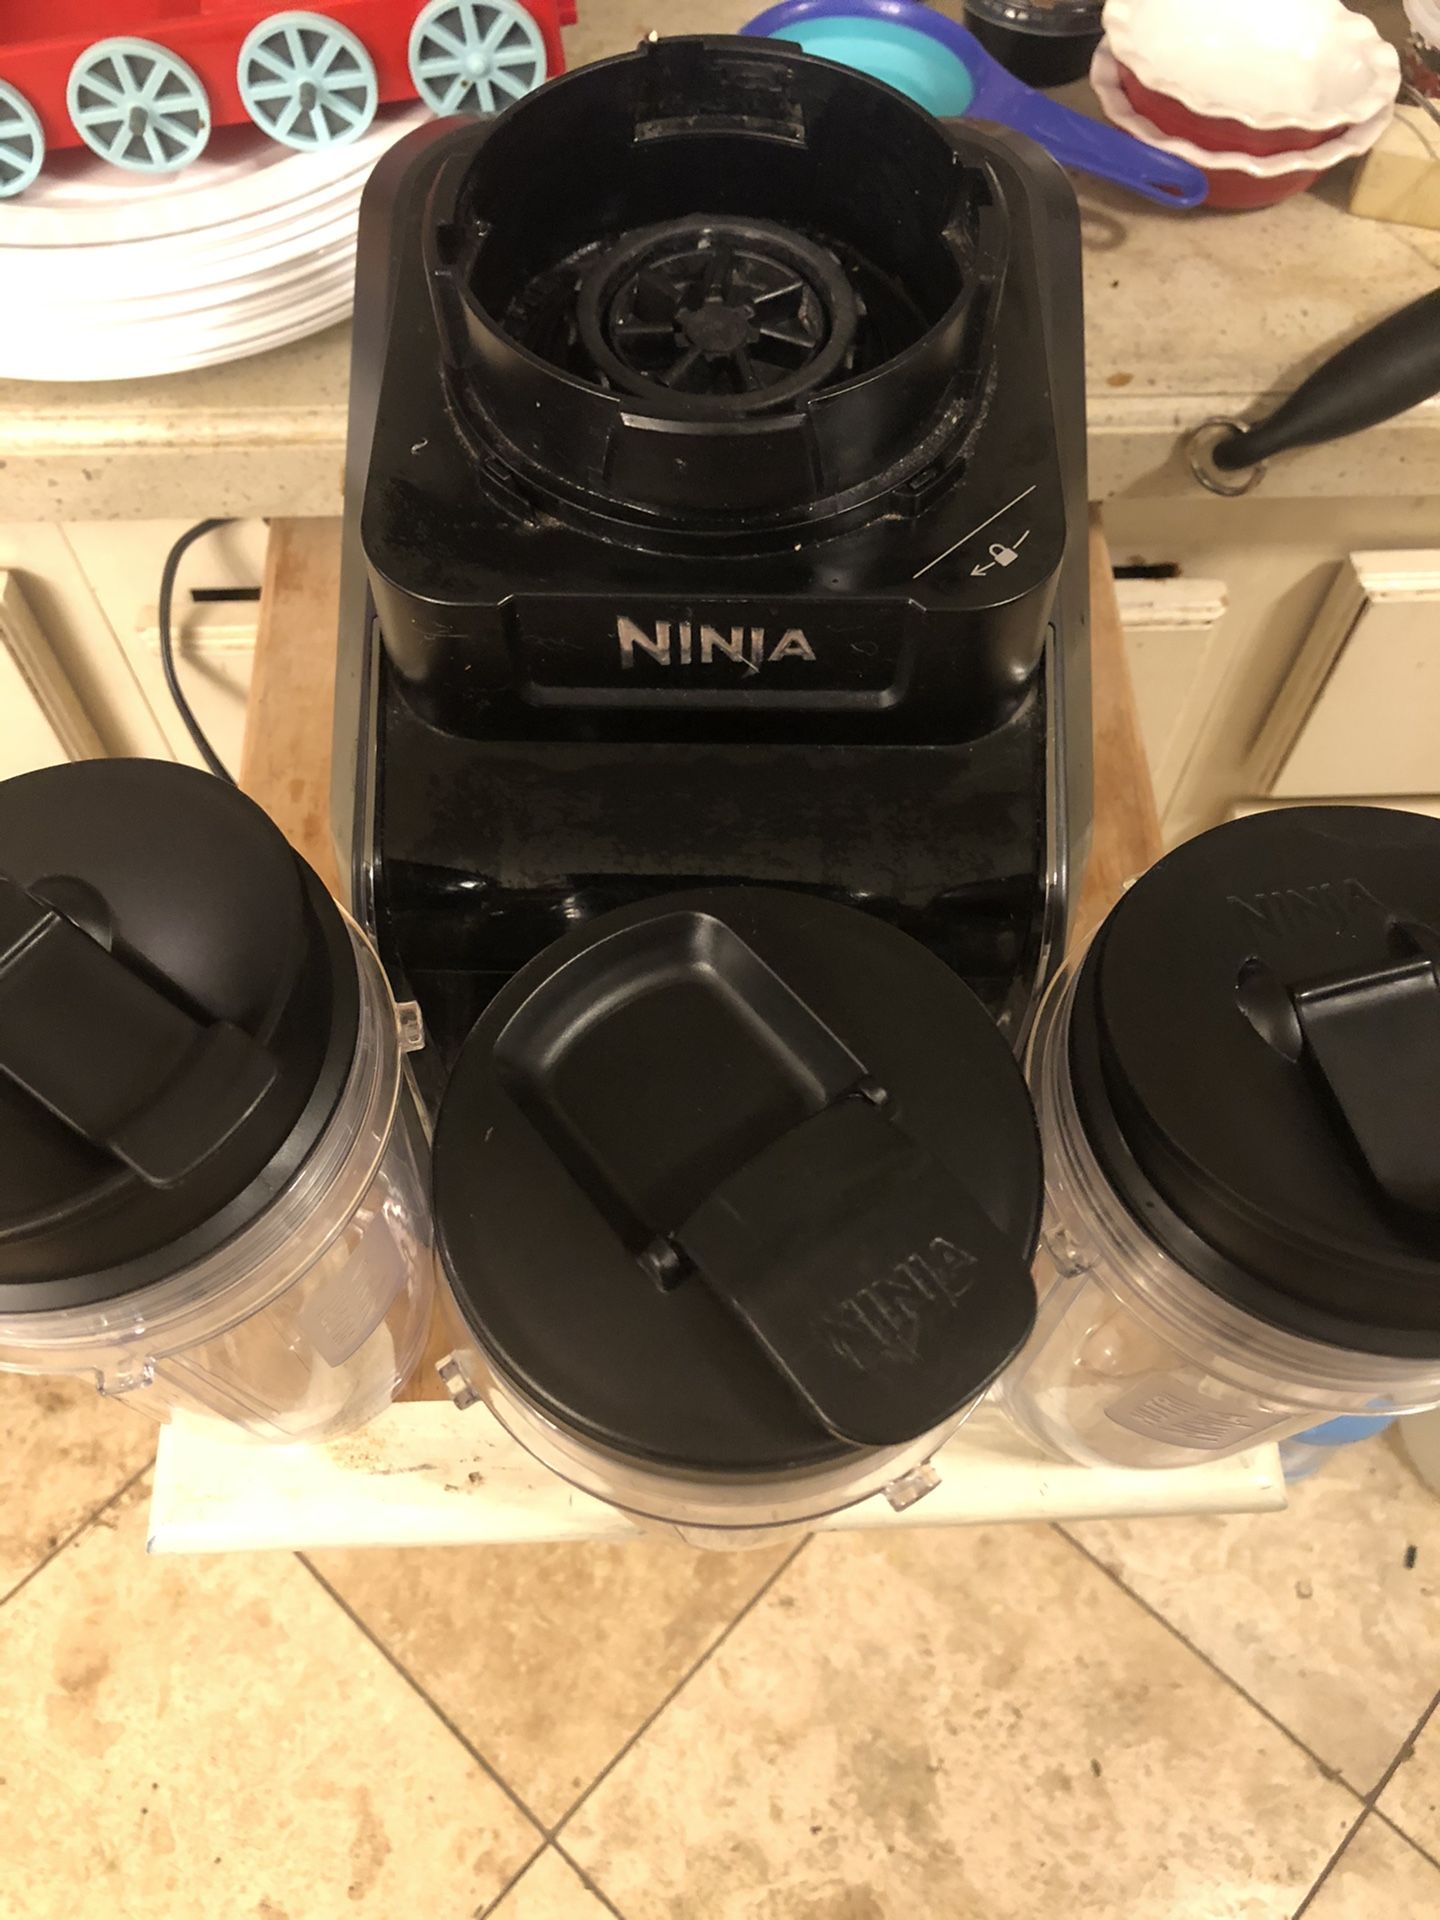 Ninja CT680 blender base with 3 24 oz cups